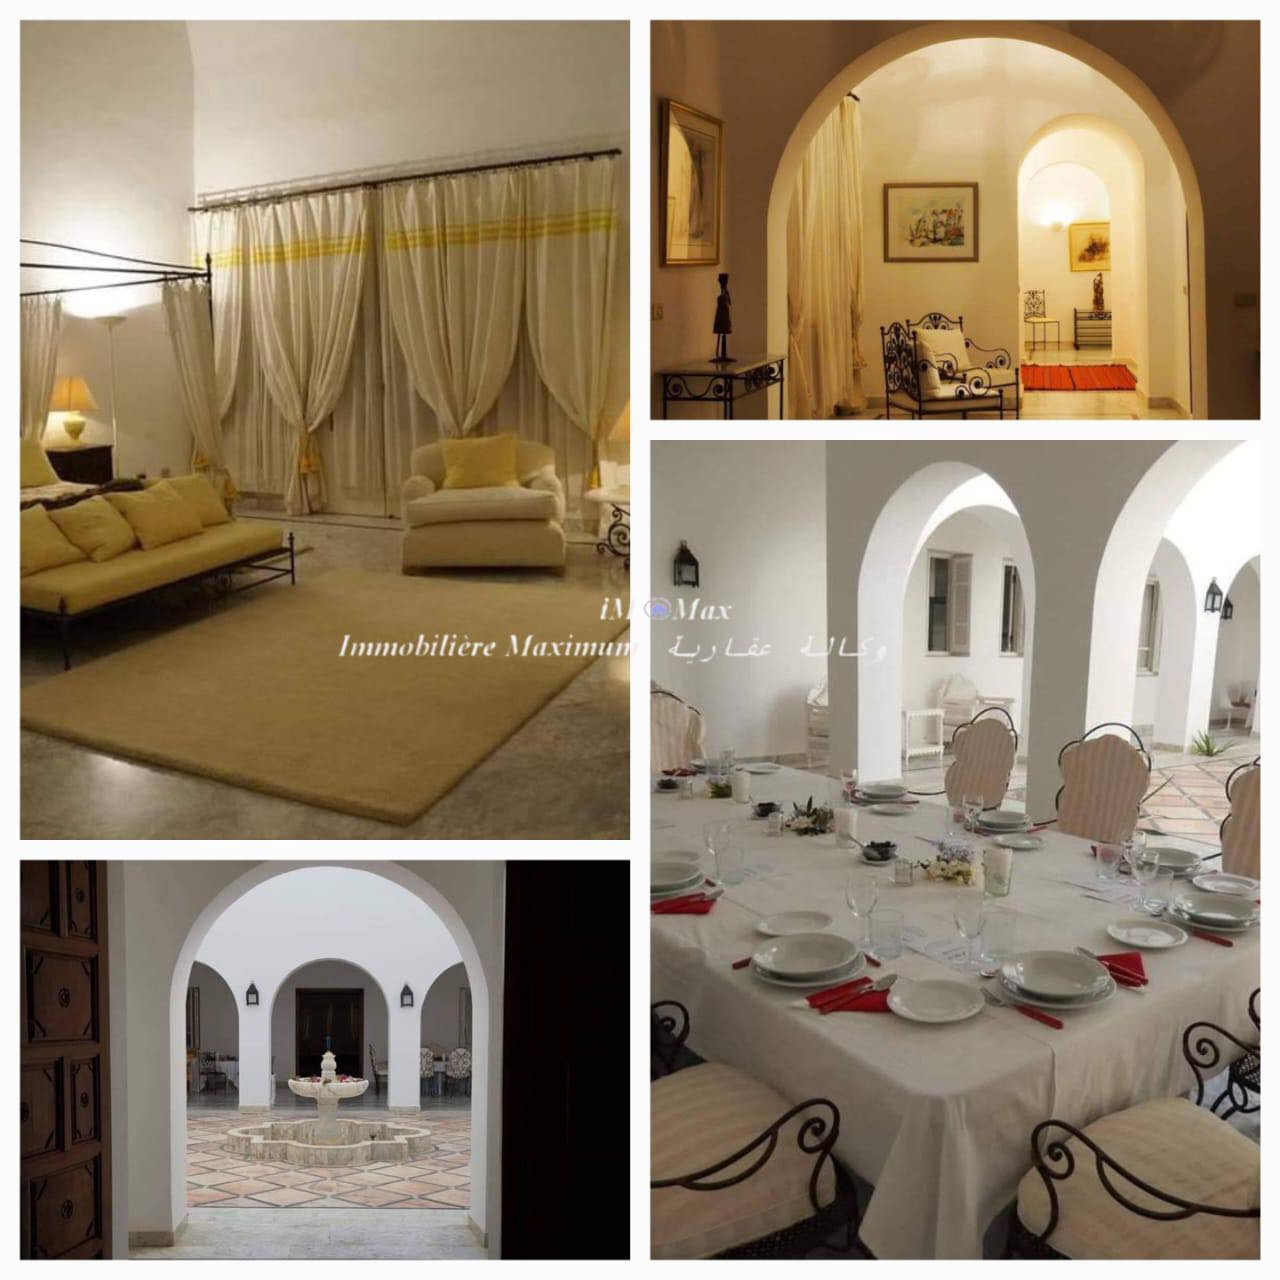 Djerba - Houmet Essouk Djerba  Vente Maisons Une magnifique et unique villa  djerba